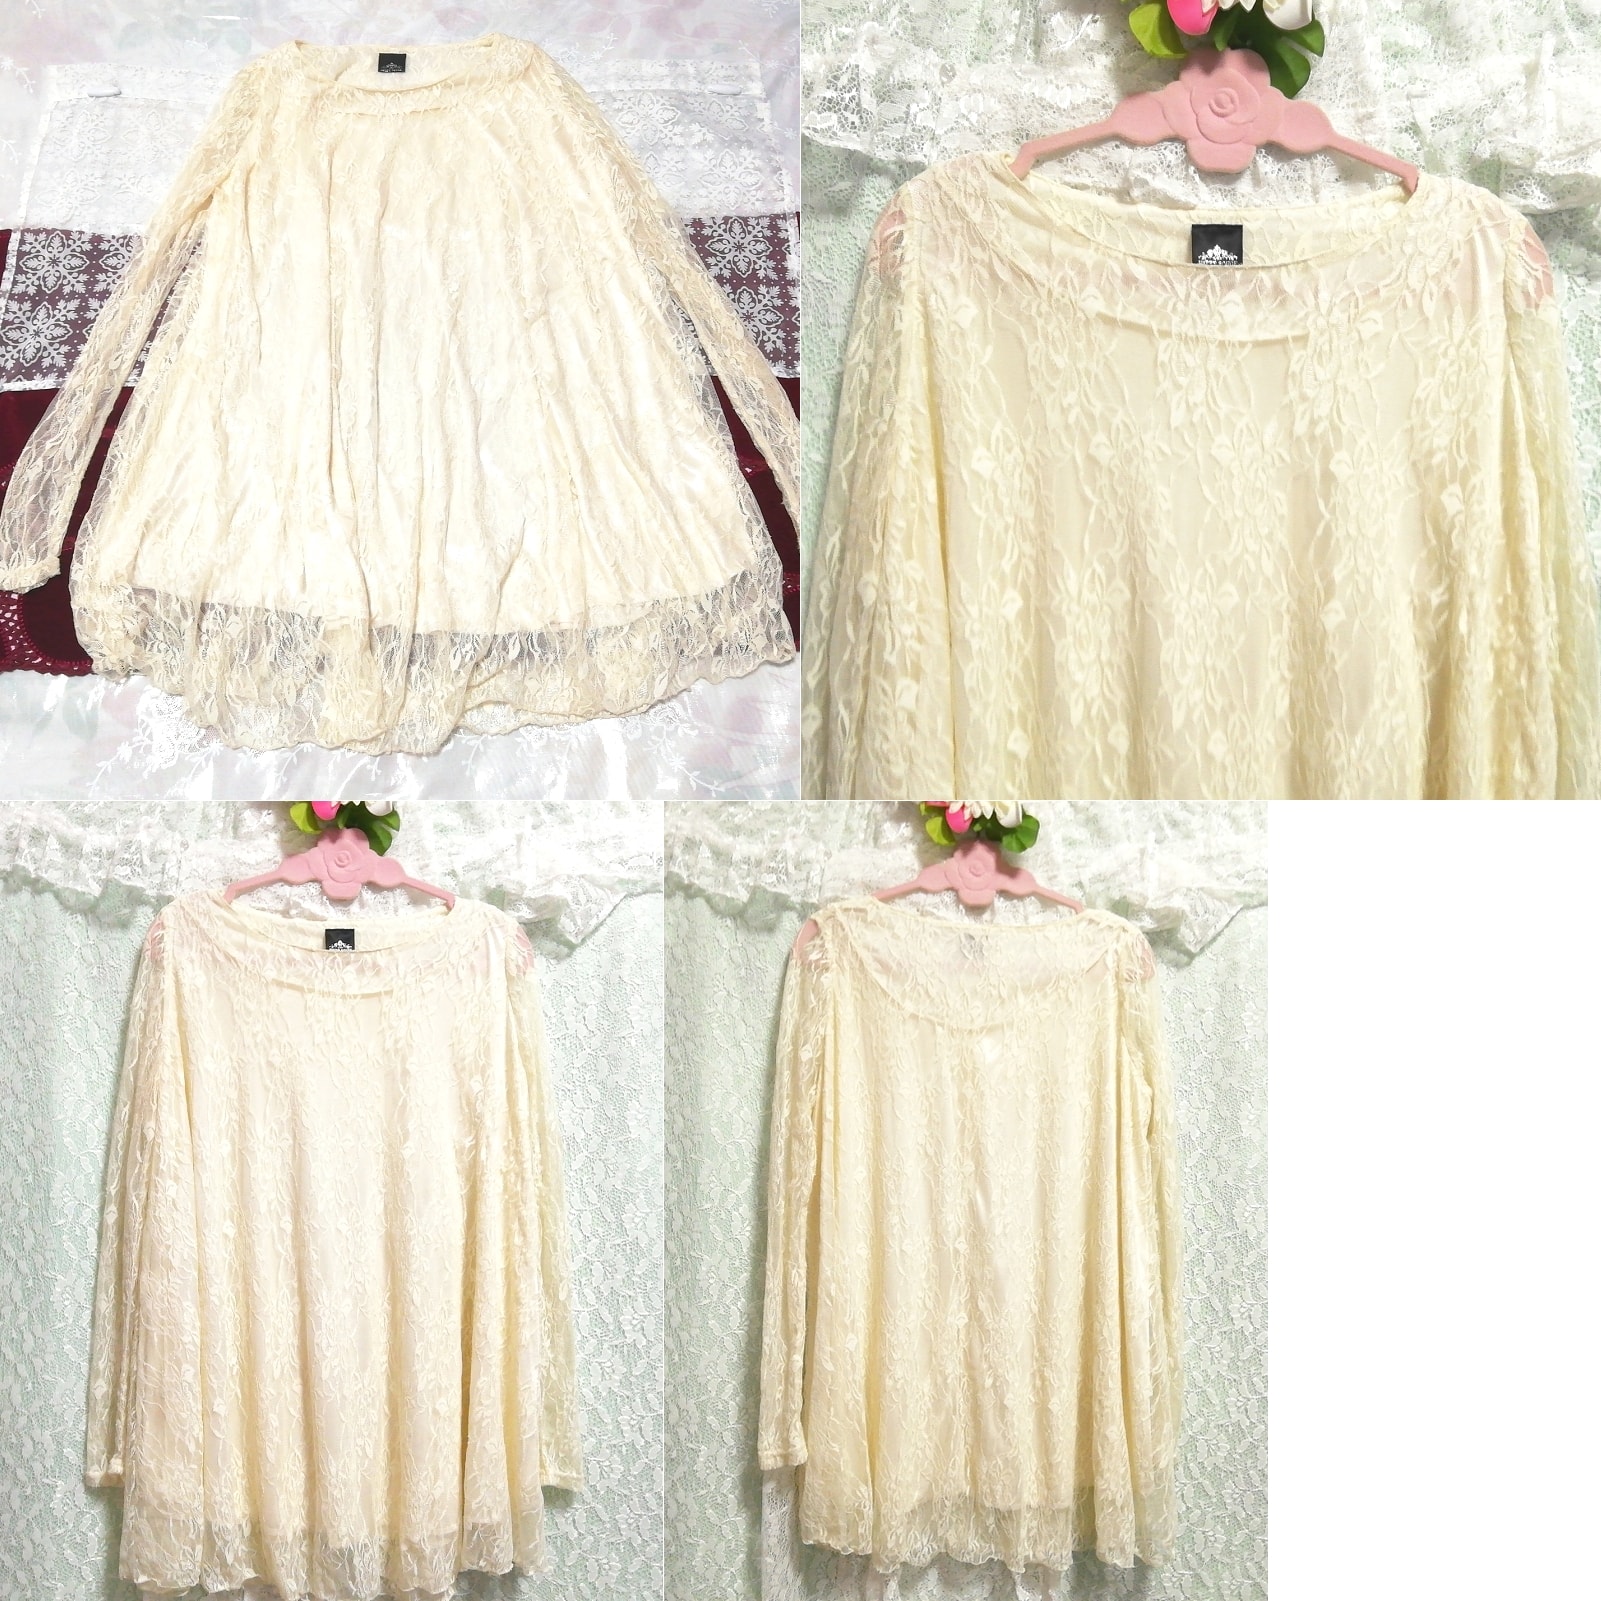 Camisón negligee túnica de manga larga transparente de encaje blanco floral blanco, sayo, manga larga, talla m